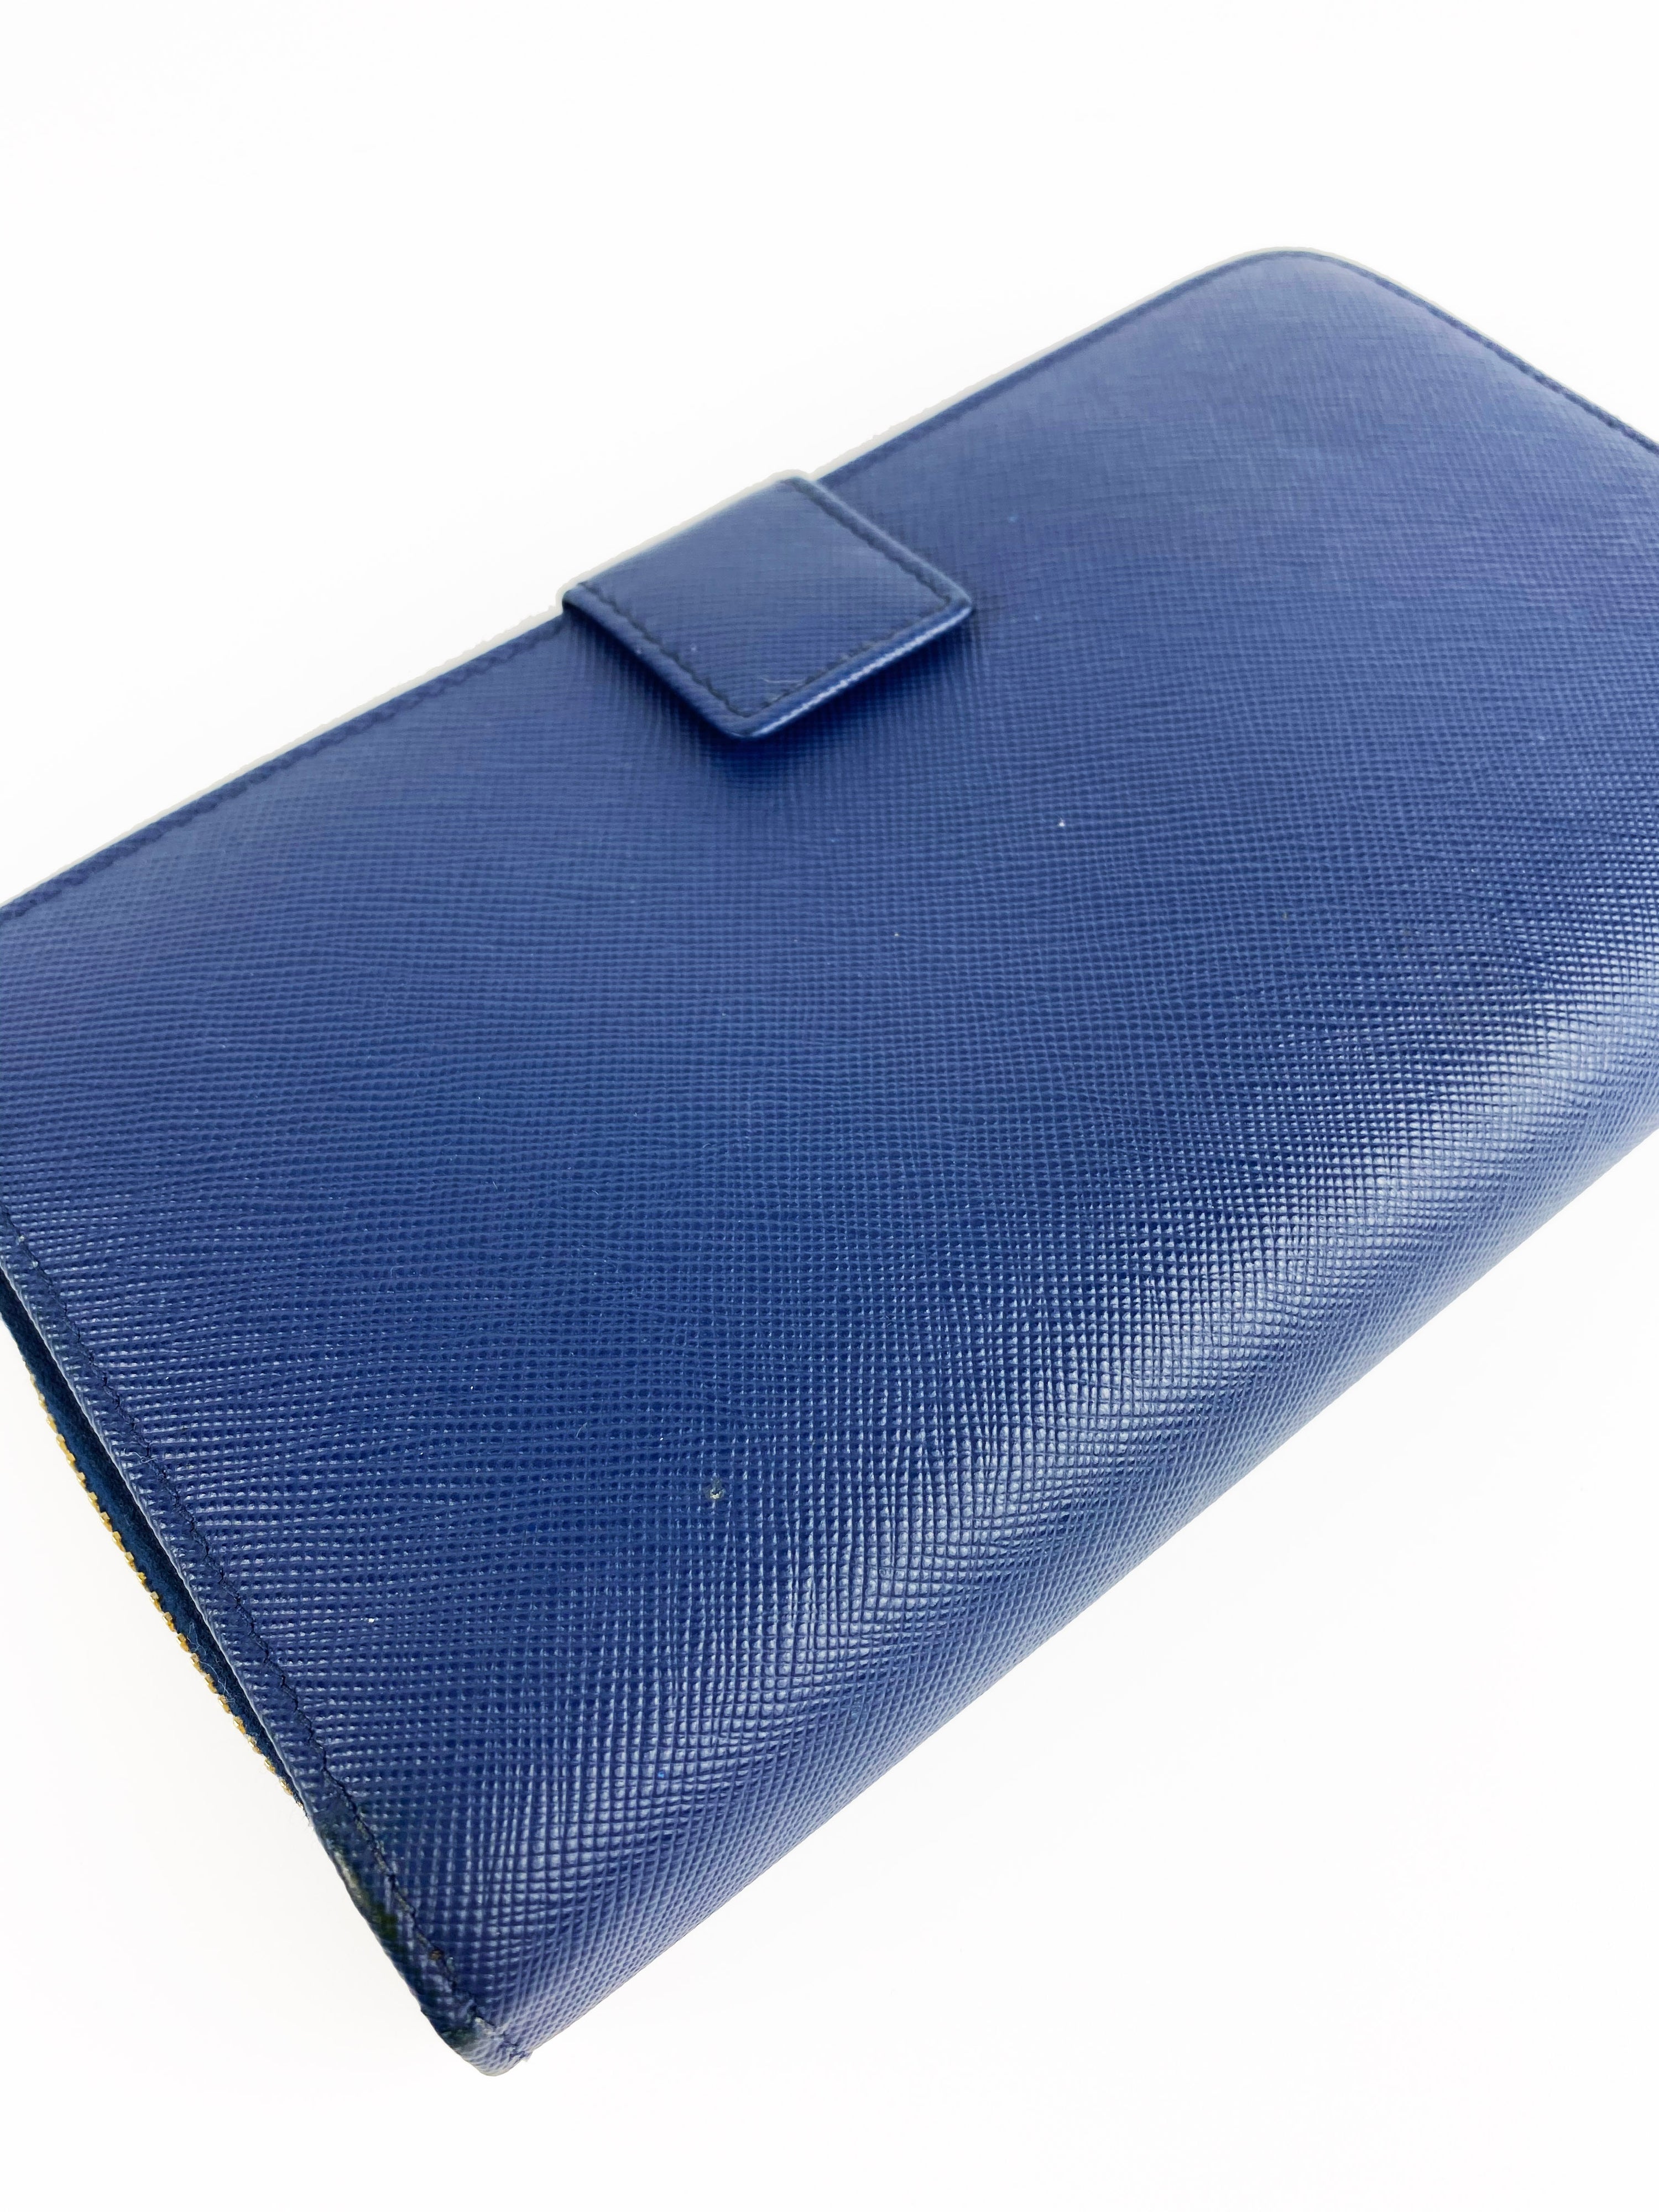 Prada Navy Blue Saffiano Zipped Wallet